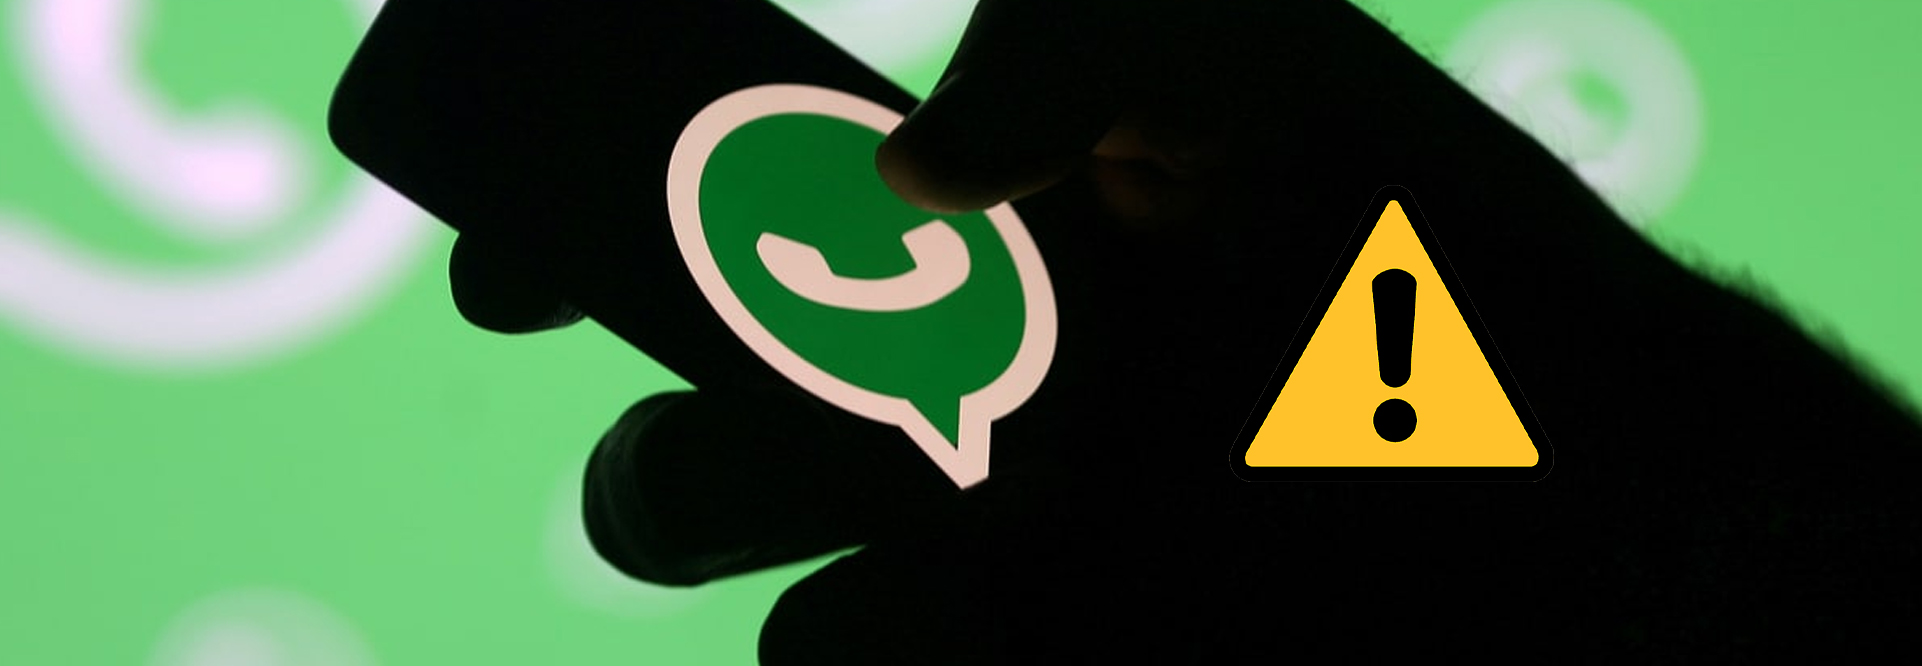 WhatsApp Ending Support for Older Phones